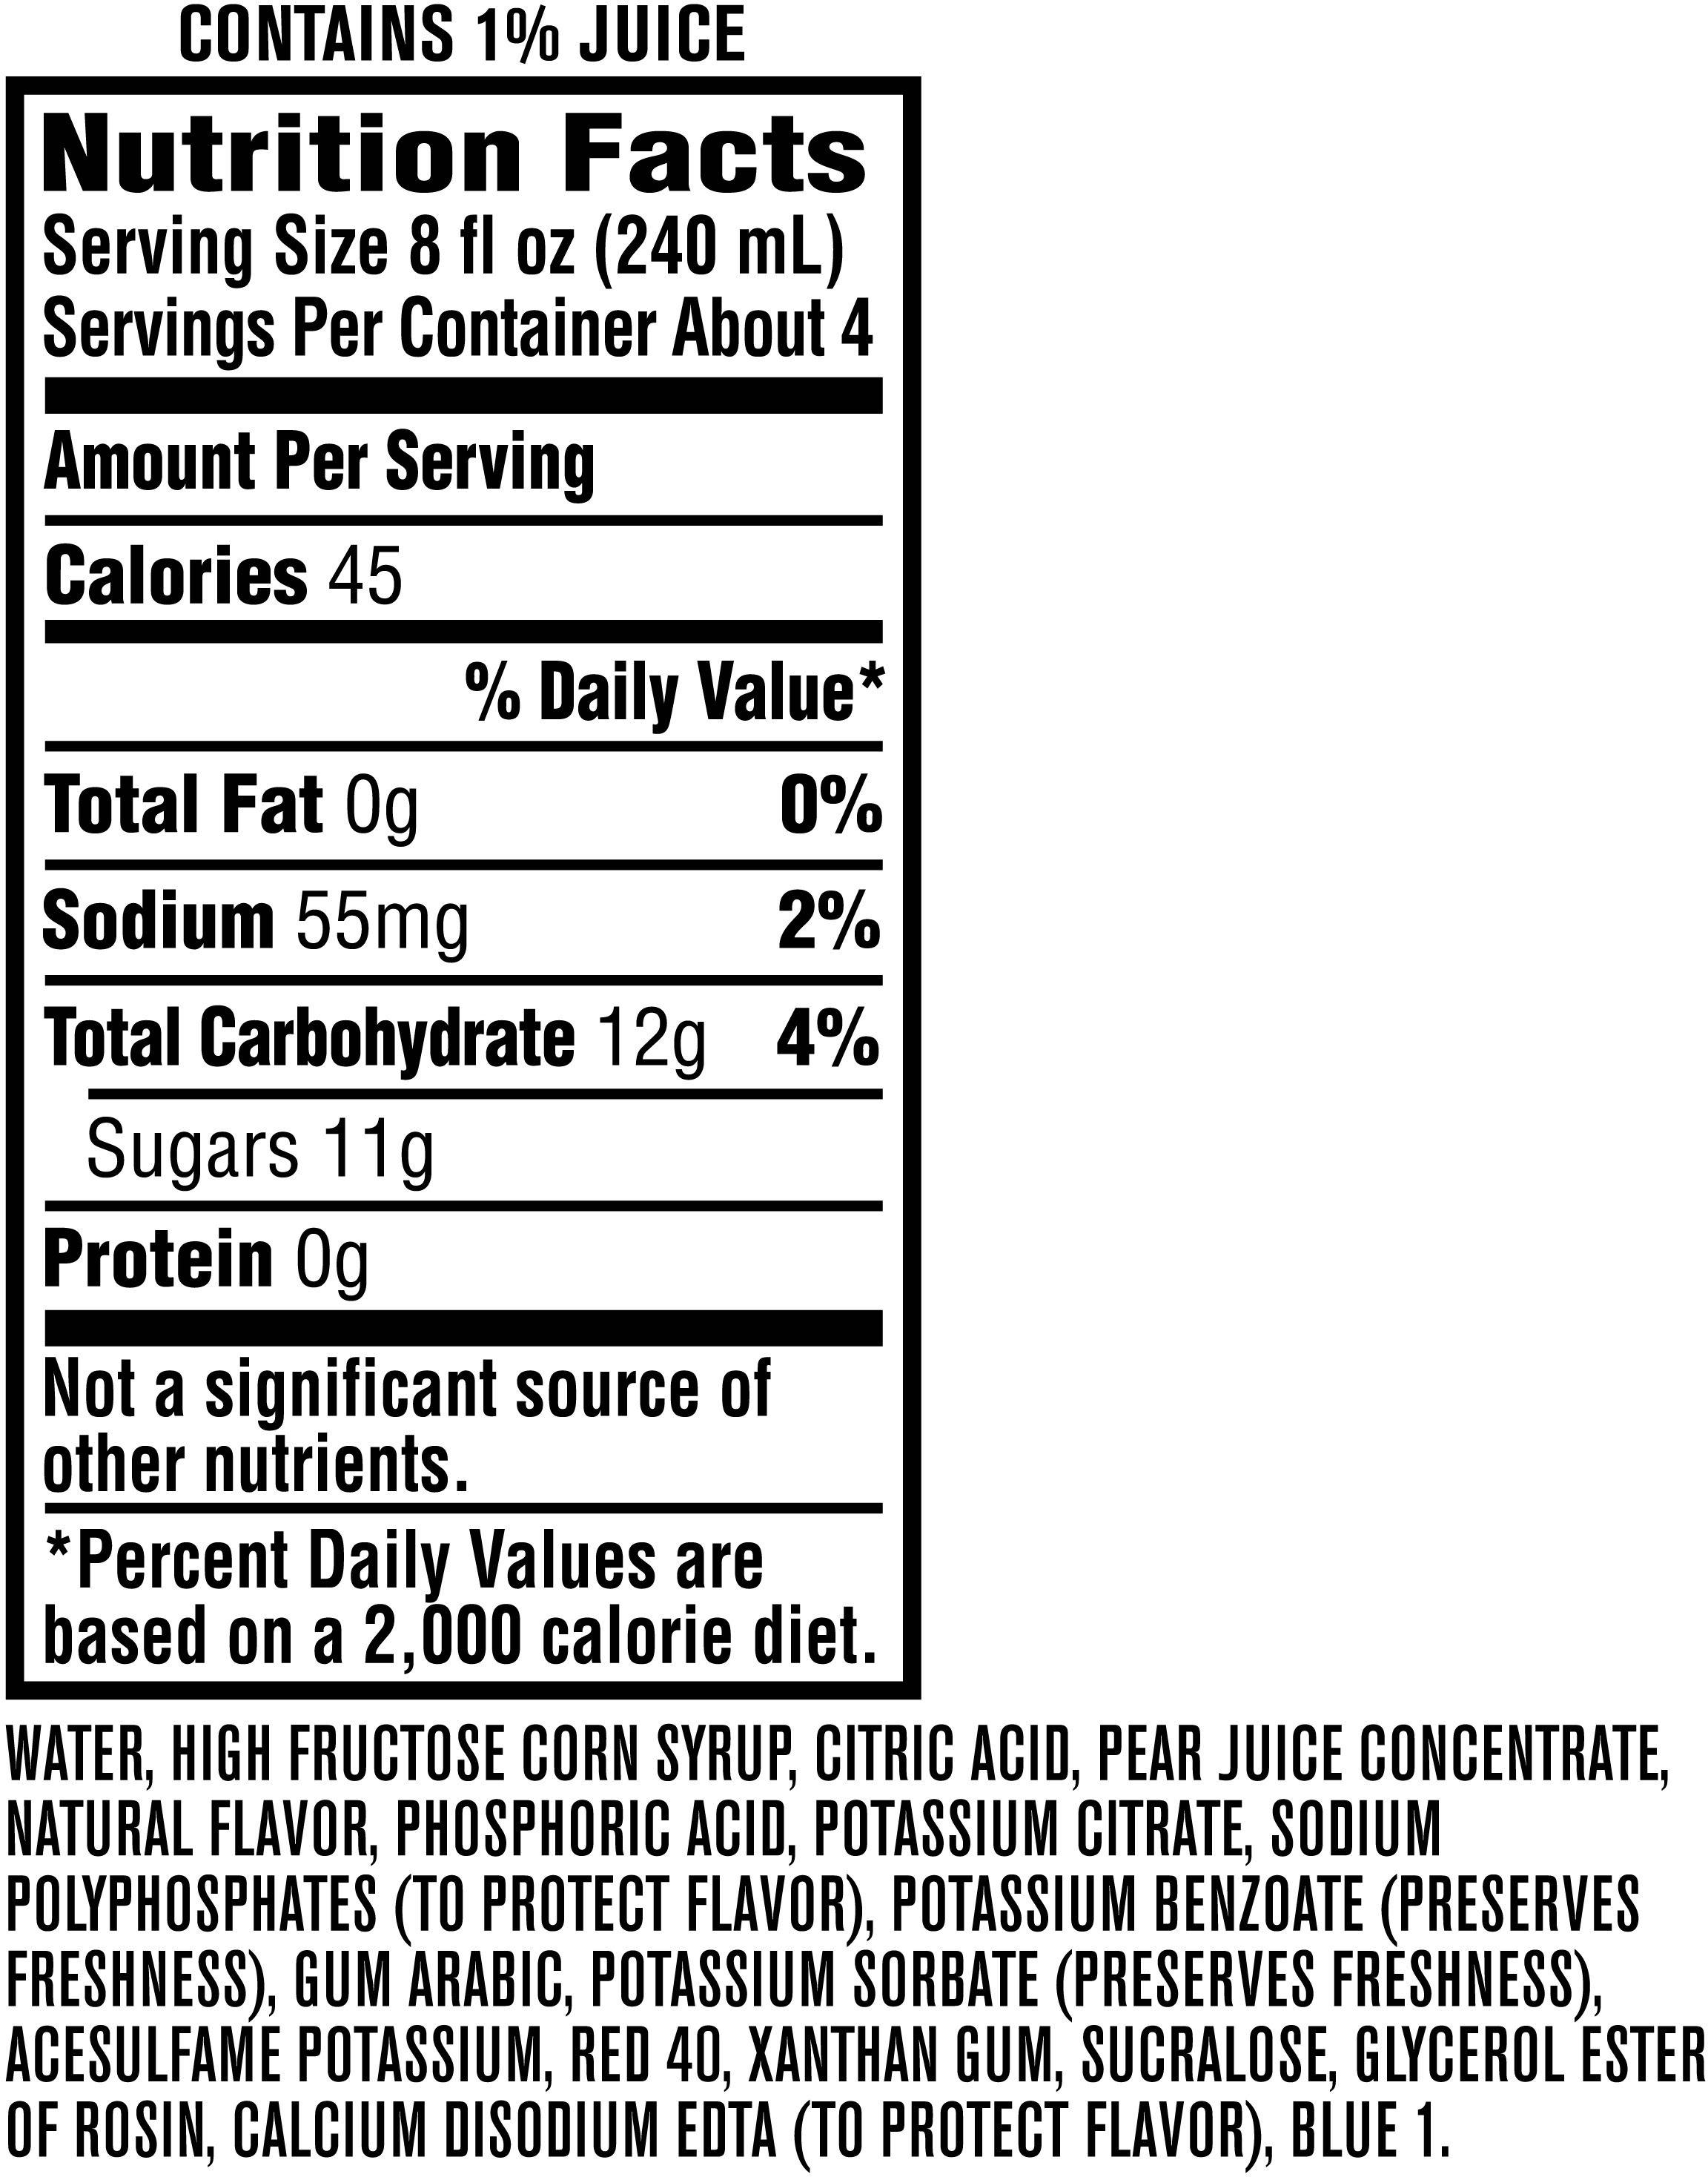 Image describing nutrition information for product Brisk Fruit Punch Pre Priced